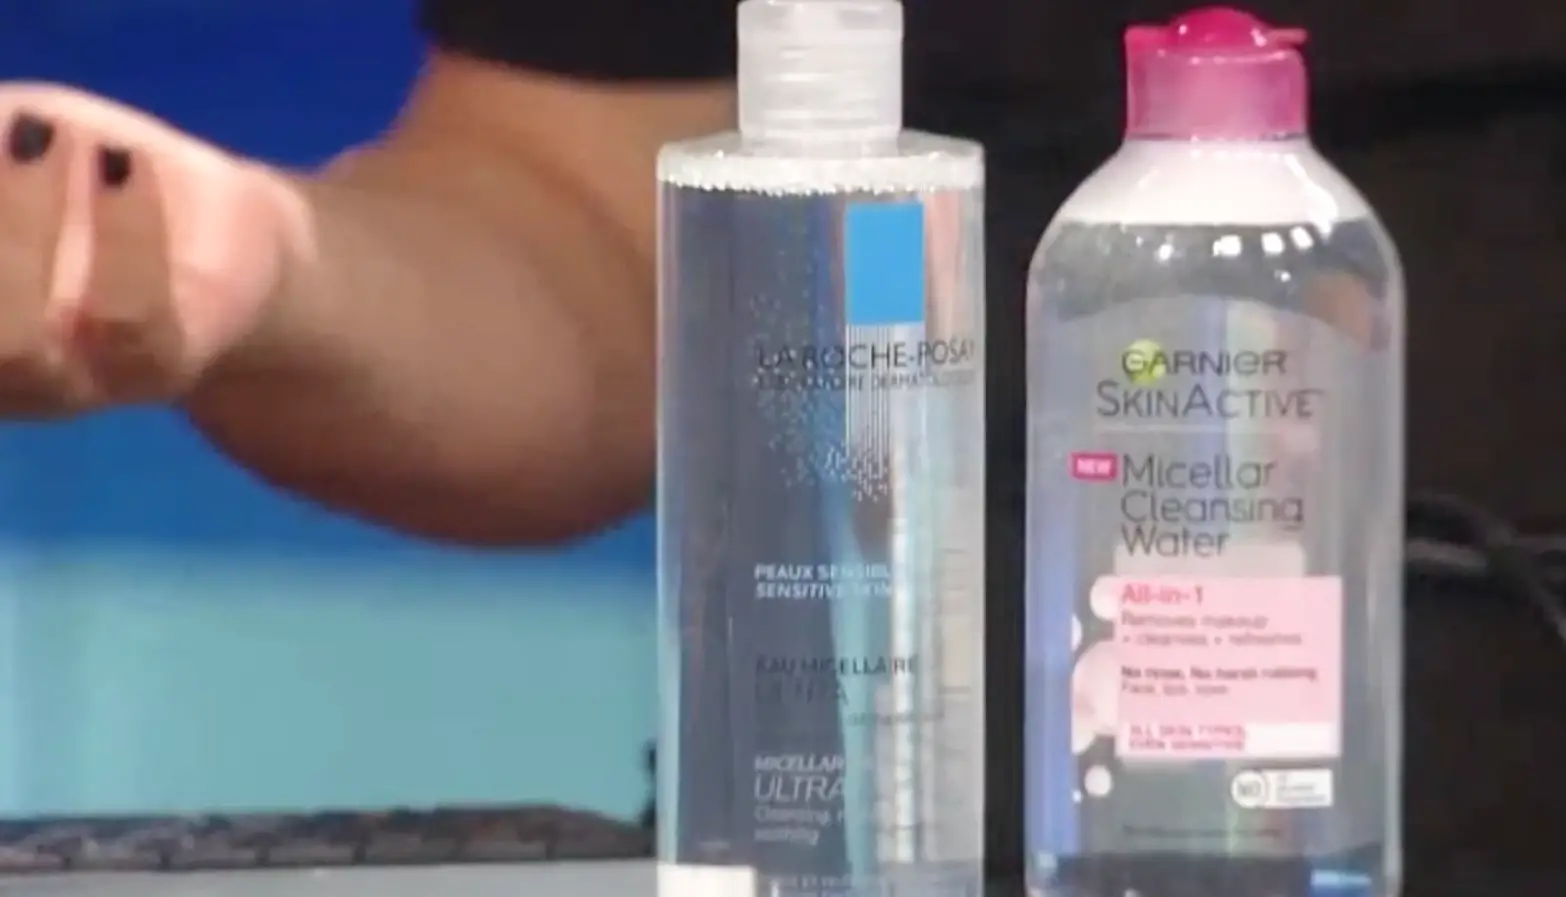 Is the Bioderma Micellar Water Okay for Acne Prone Skin?